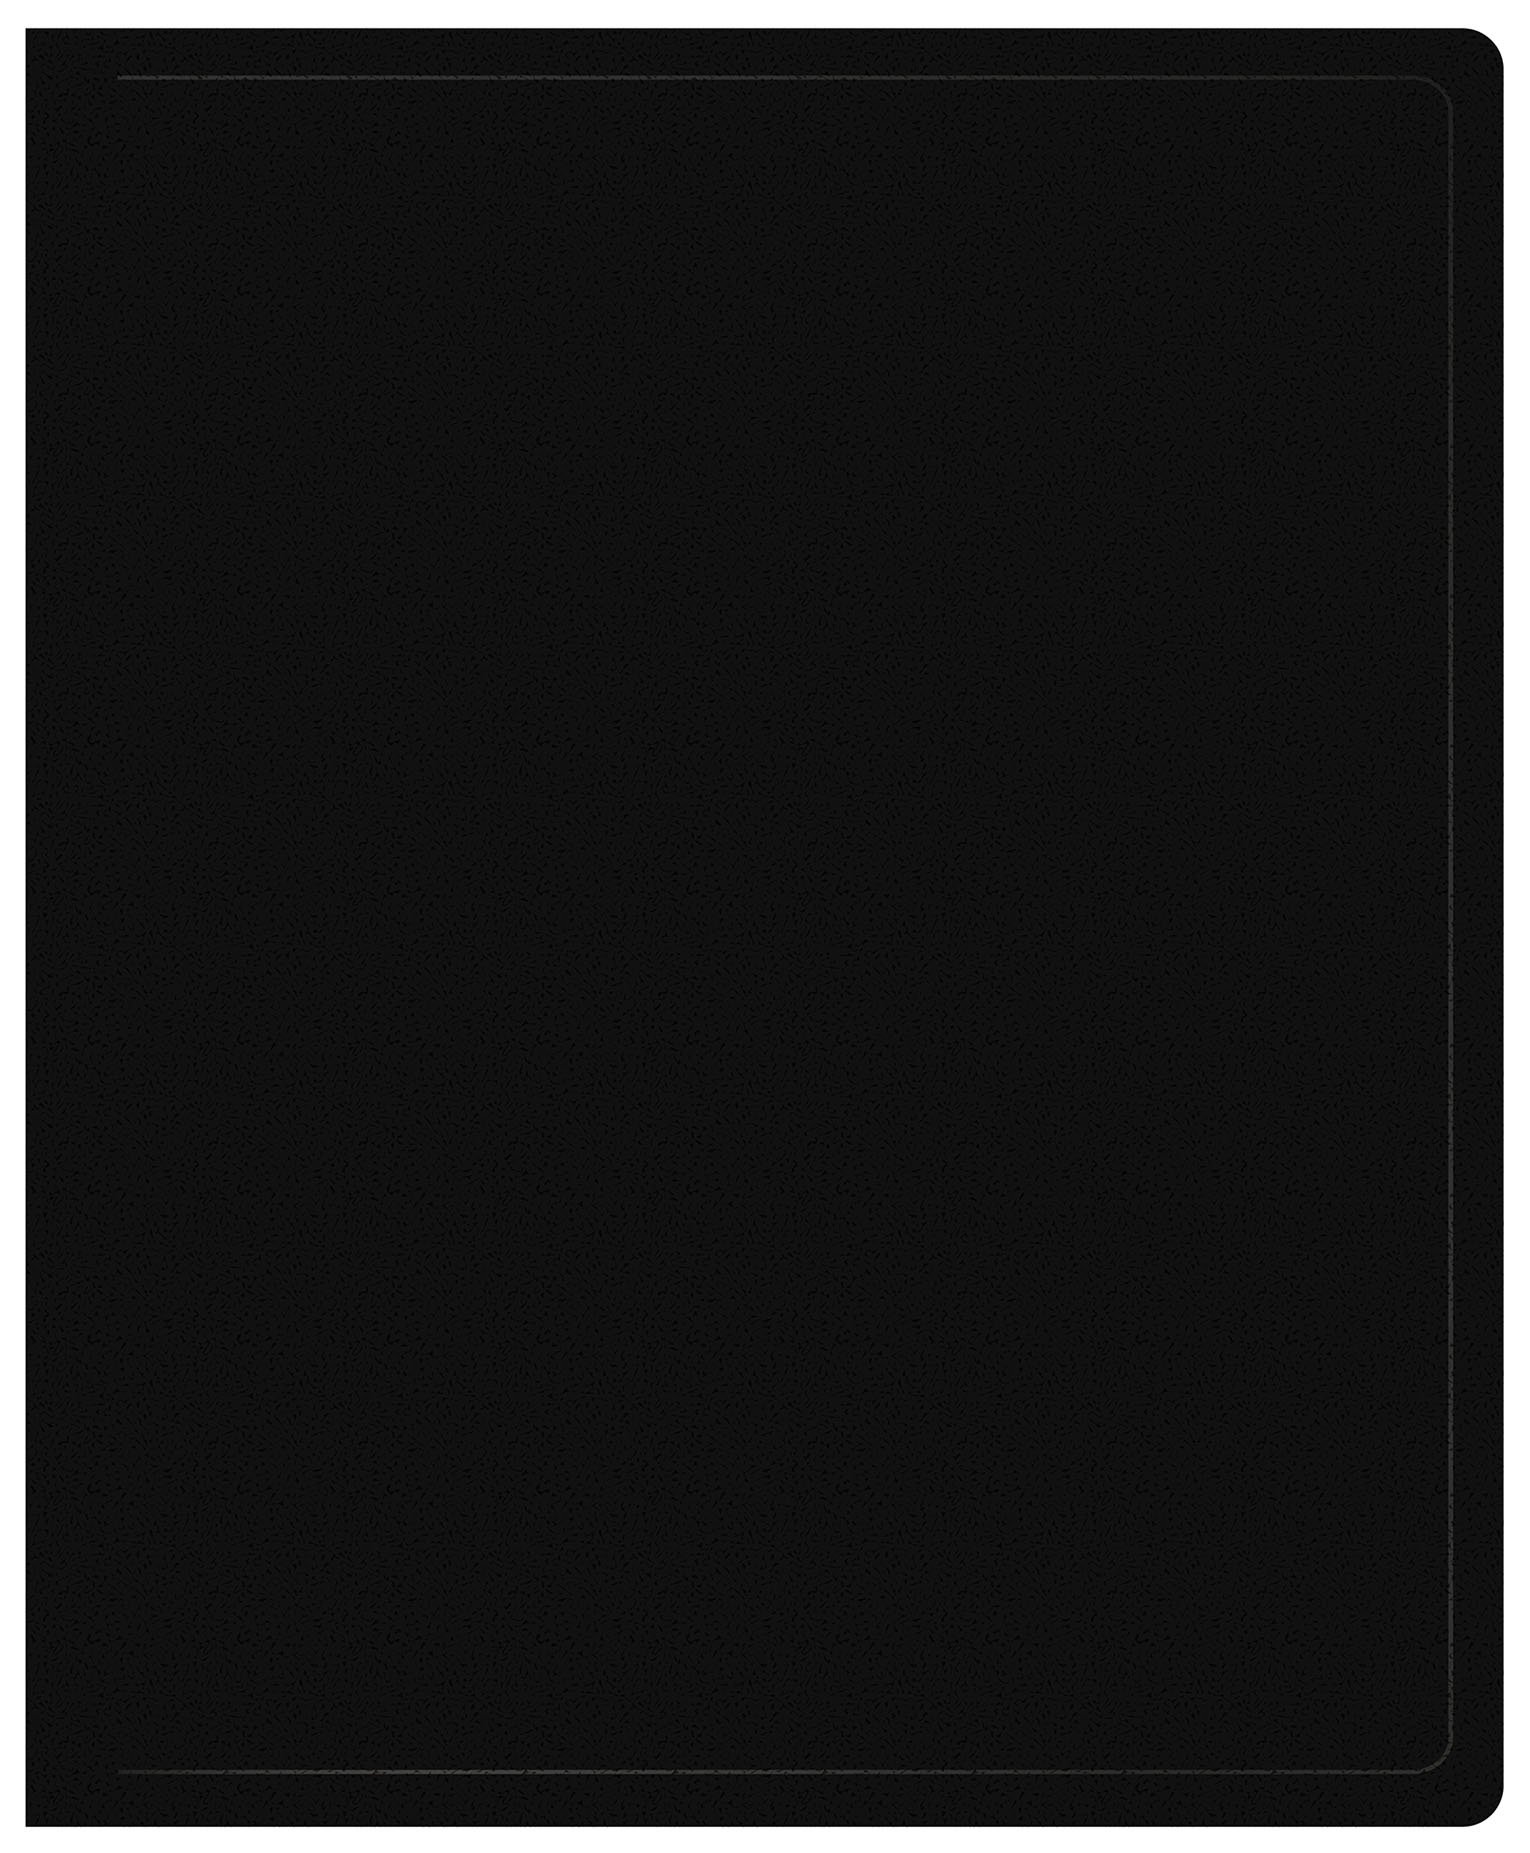 черное фото фон без рисунка